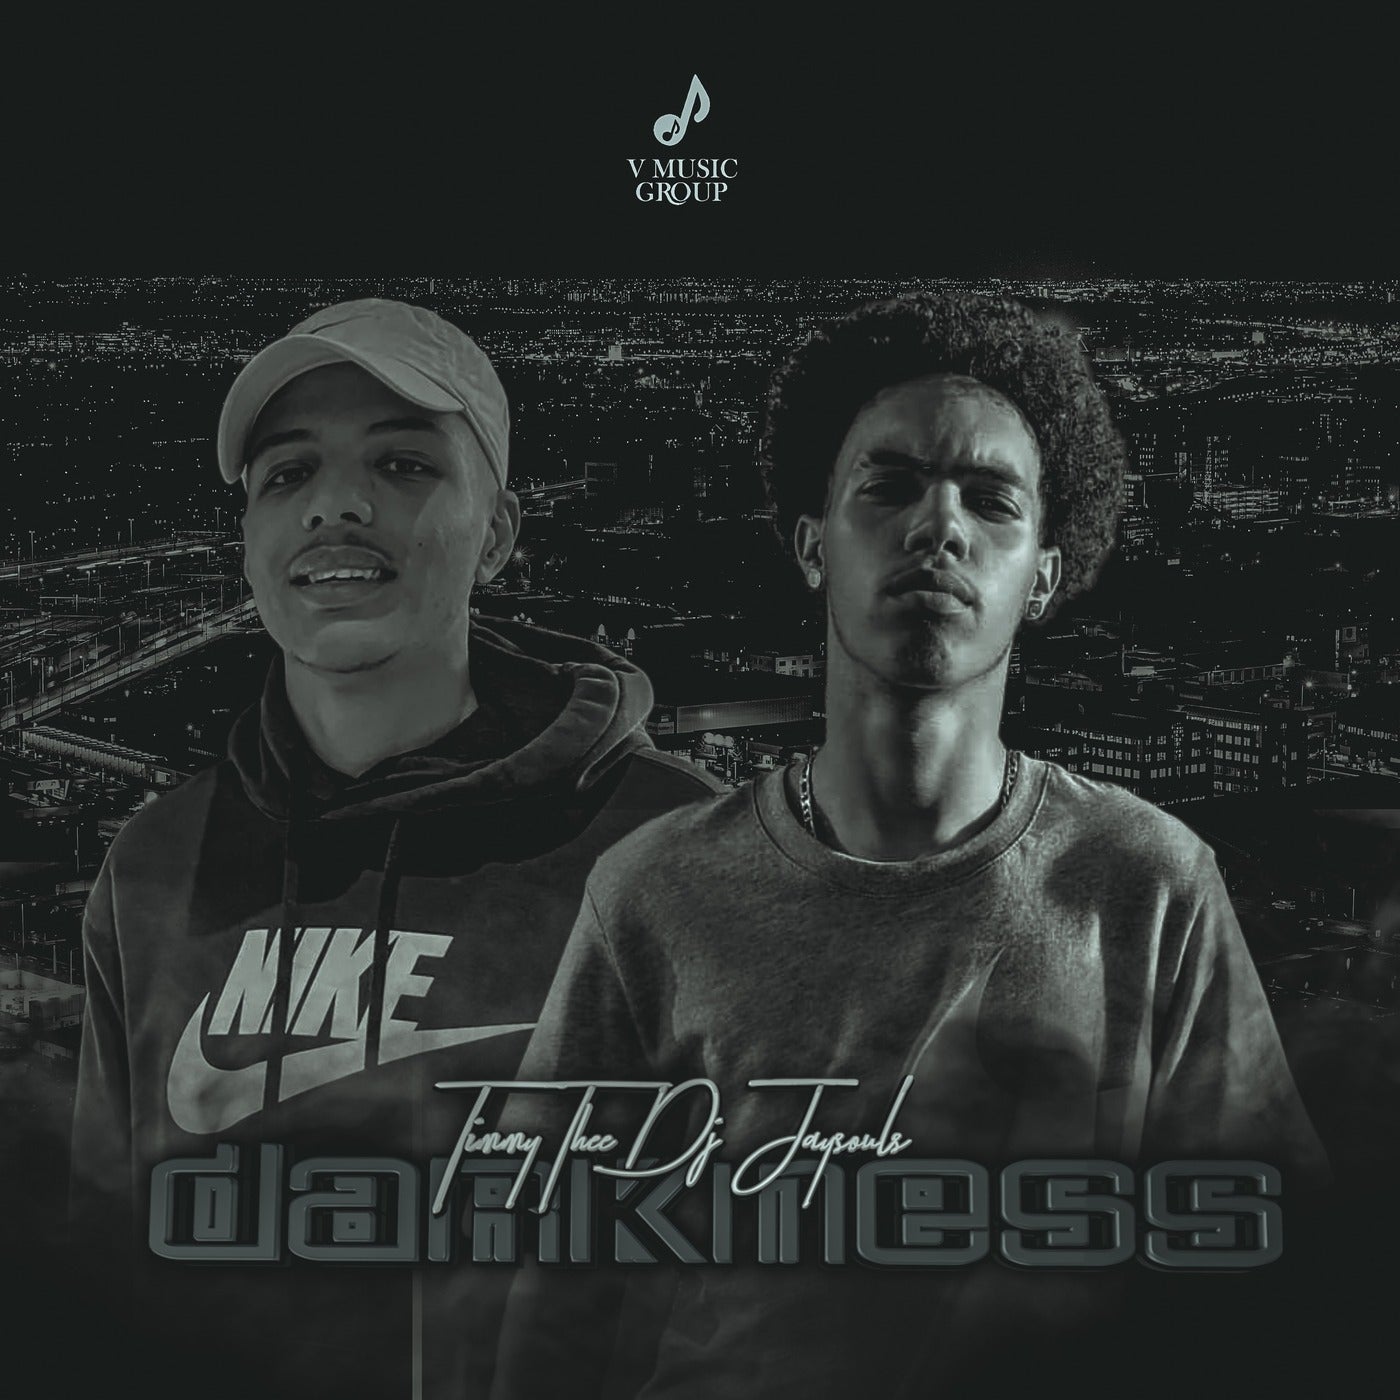 Timmy Thee Dj & Jaysouls - Darkness (feat. Bov Musiq) [V Music Group]